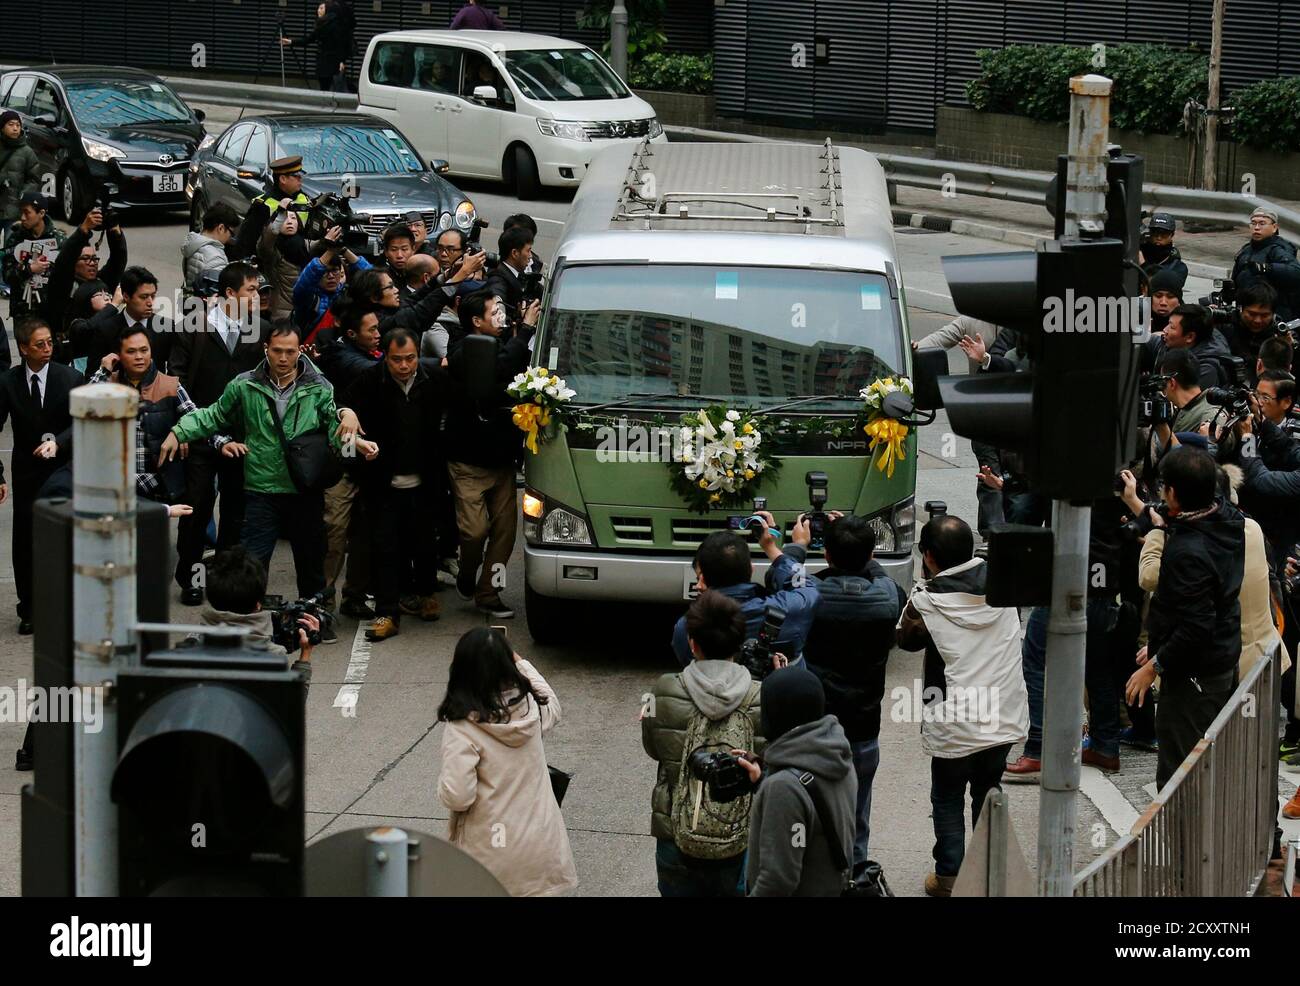 Journalists Surround The Hearse Of The Late Hong Kong Media Mogul Run Run Shaw Leaving A Funeral Home On Way To A Crematorium In Hong Kong January 10 14 Hong Kong Media